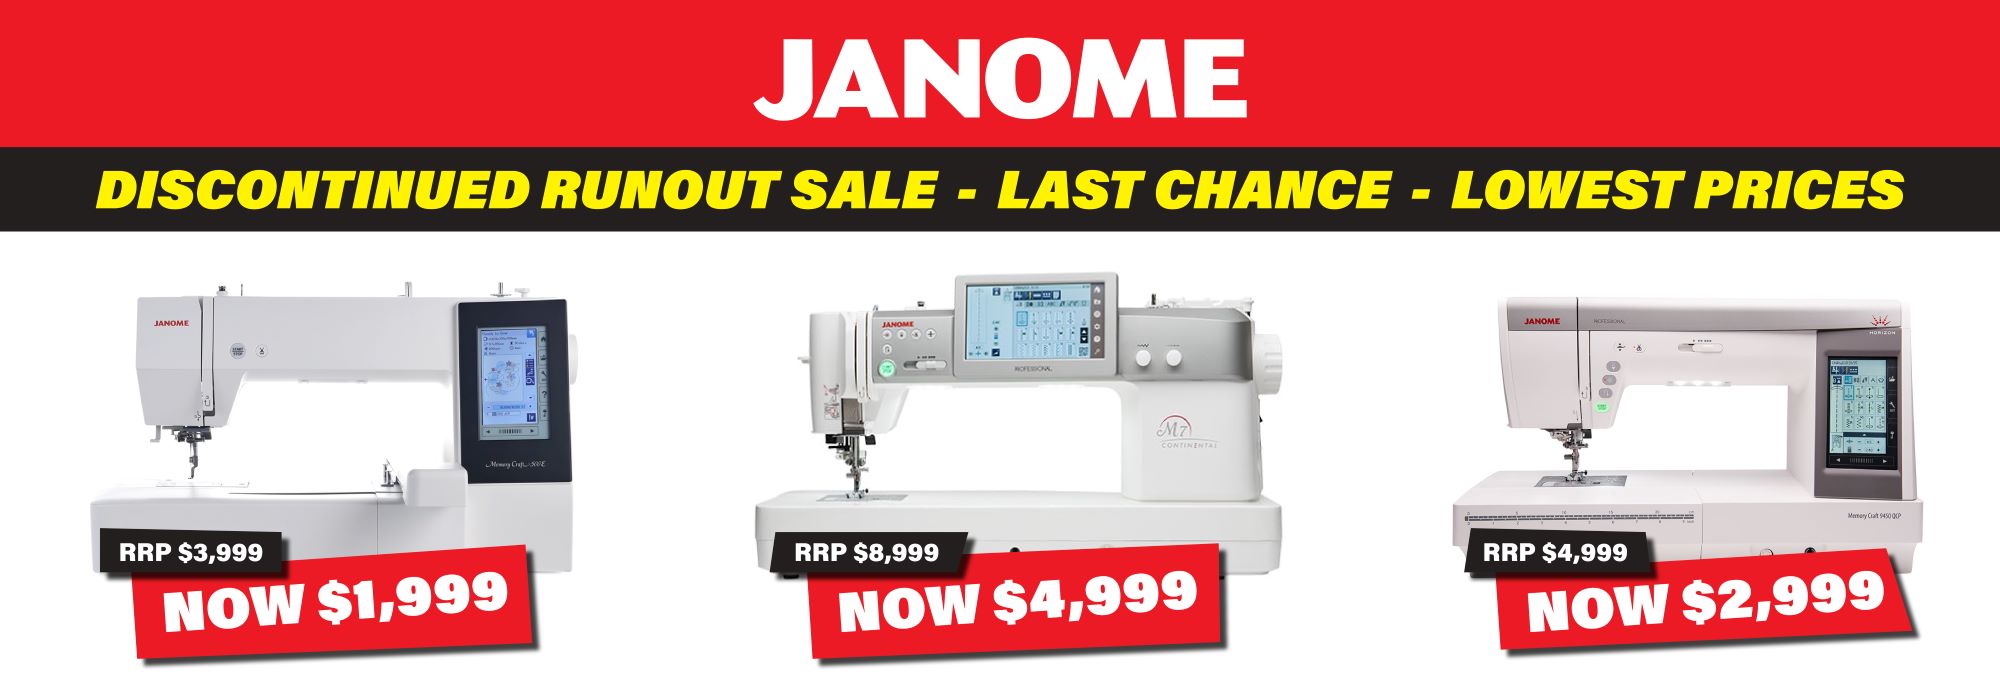 Janome Runout Sale 01